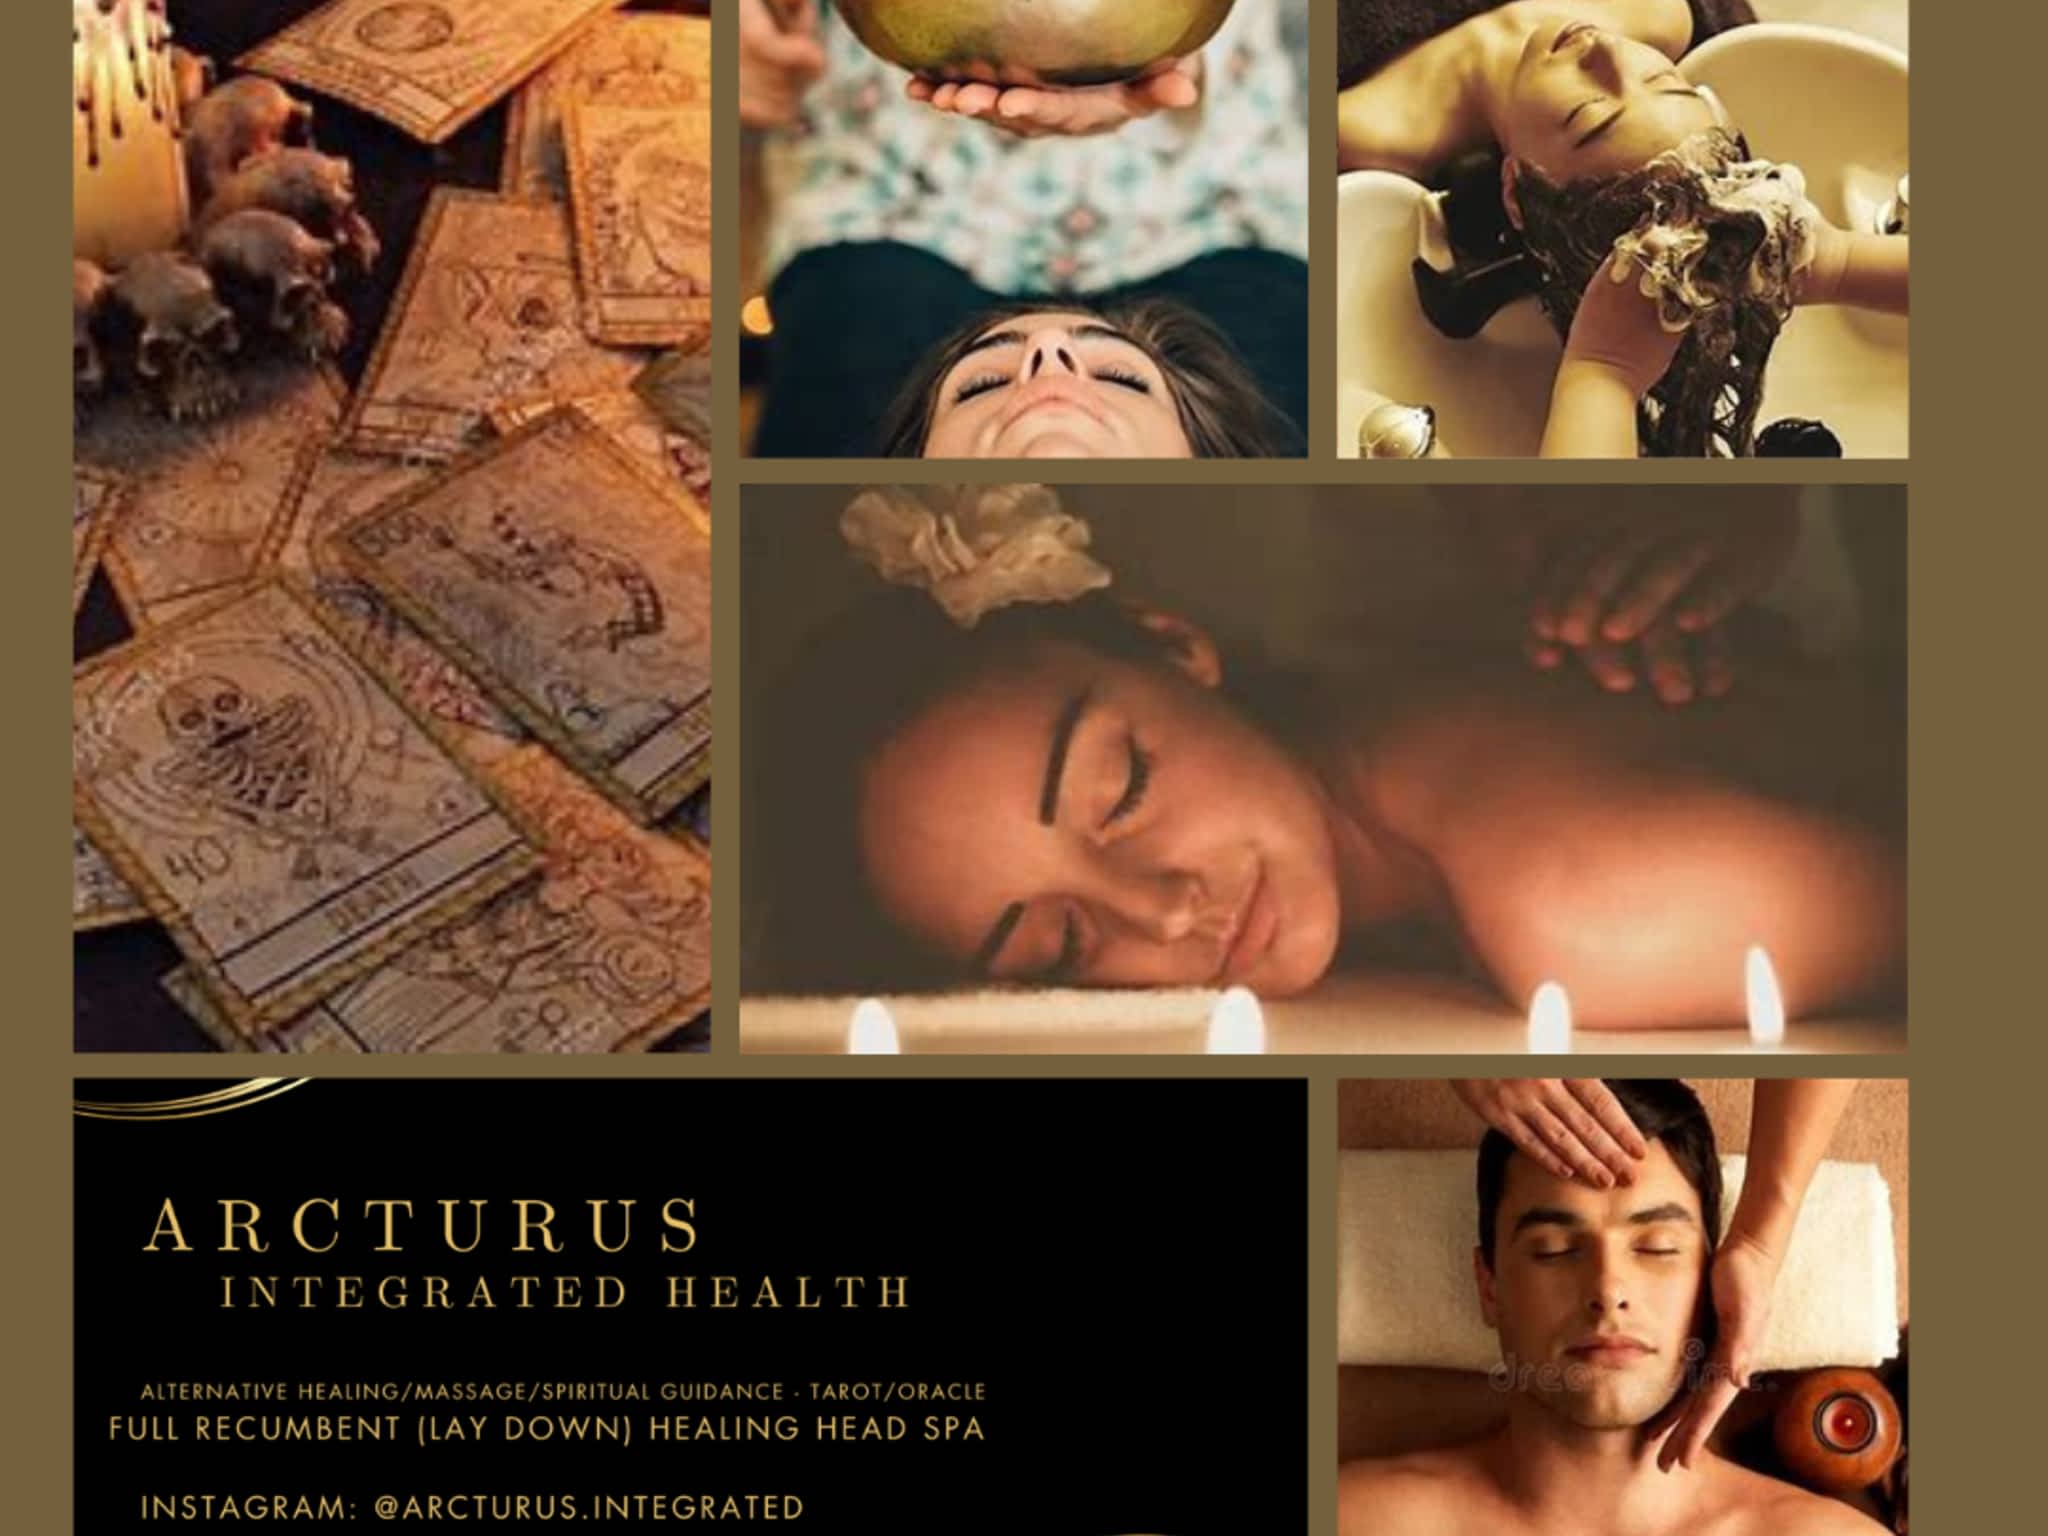 photo Arcturus Integrated Health & Lay Down Head Spa